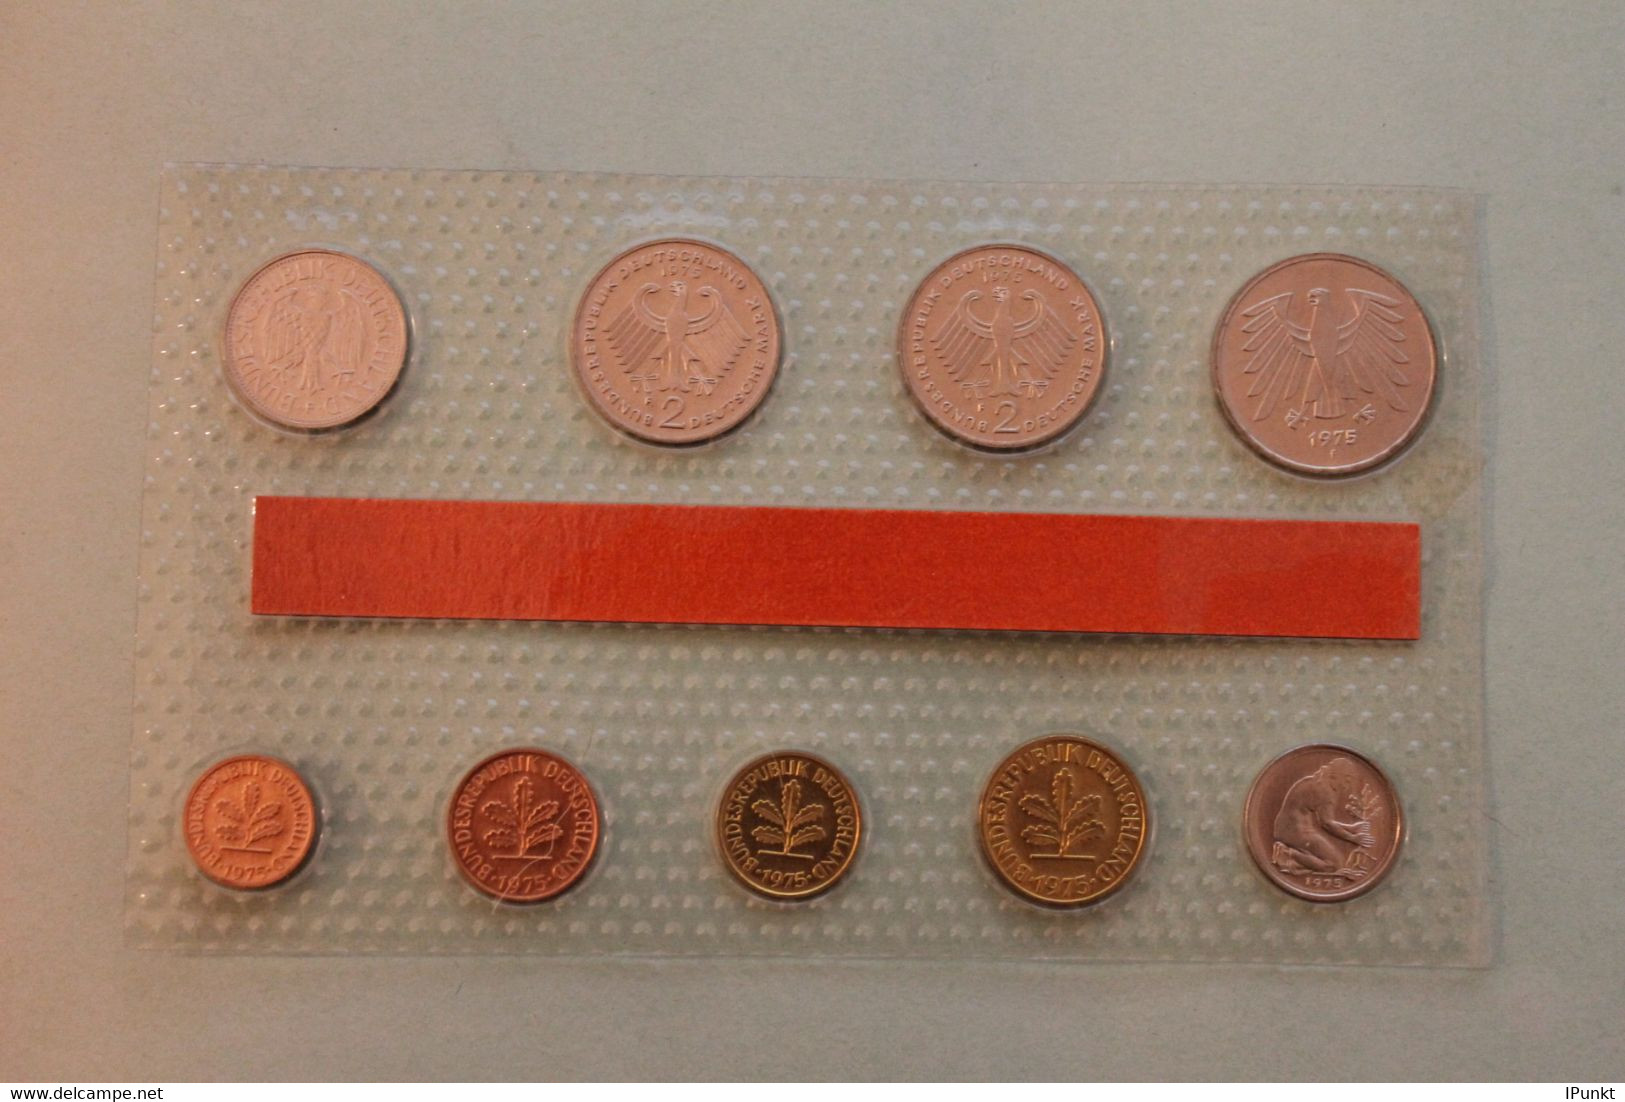 Deutschland, Kursmünzensatz Stempelglanz (stg), 1975 F - Mint Sets & Proof Sets